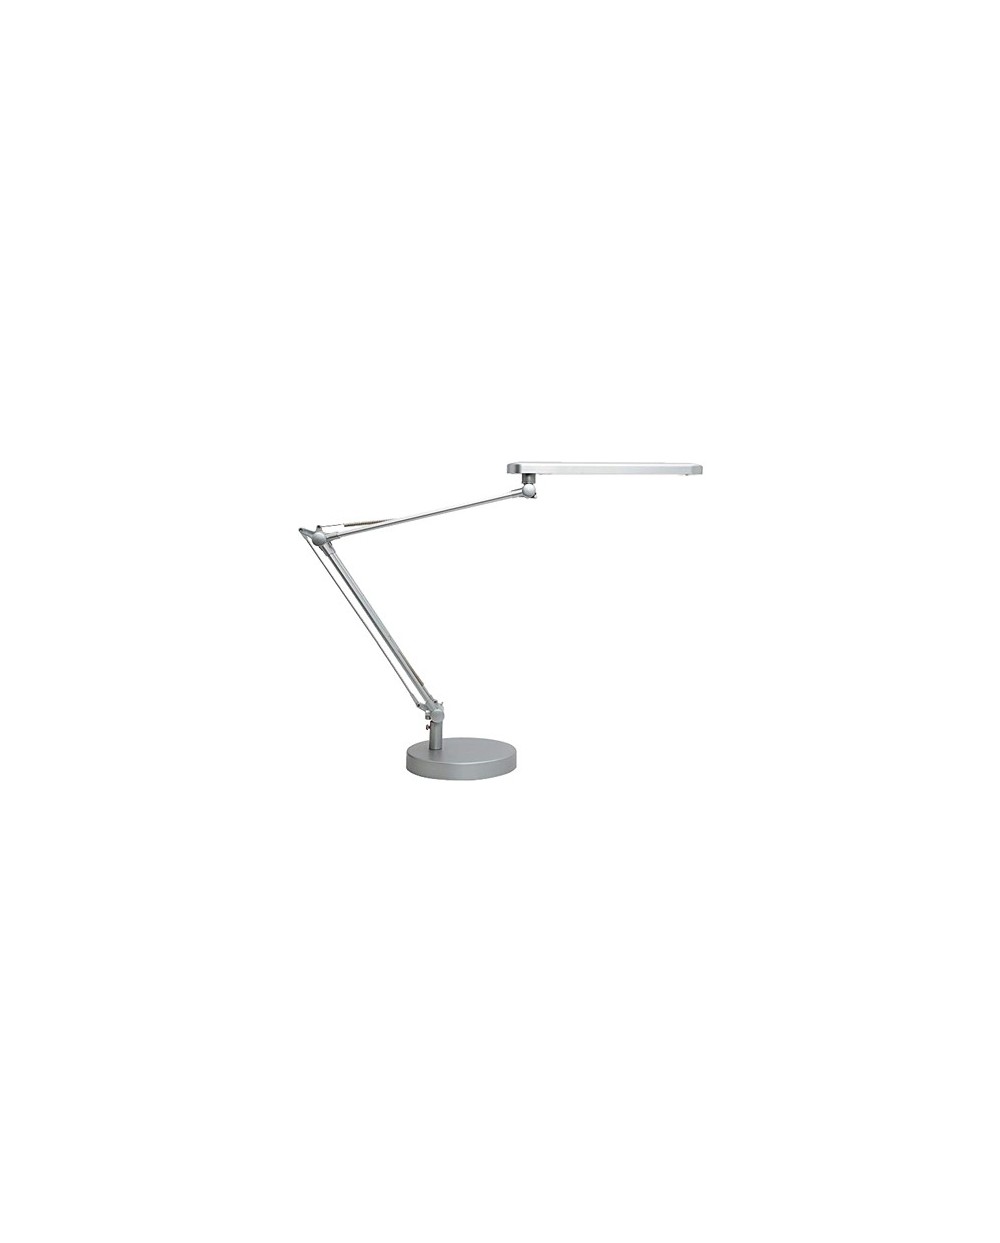 Lampara de escritorio unilux mambo led 56w doble brazo articulado abs y aluminio gris metalizado base 19 cm